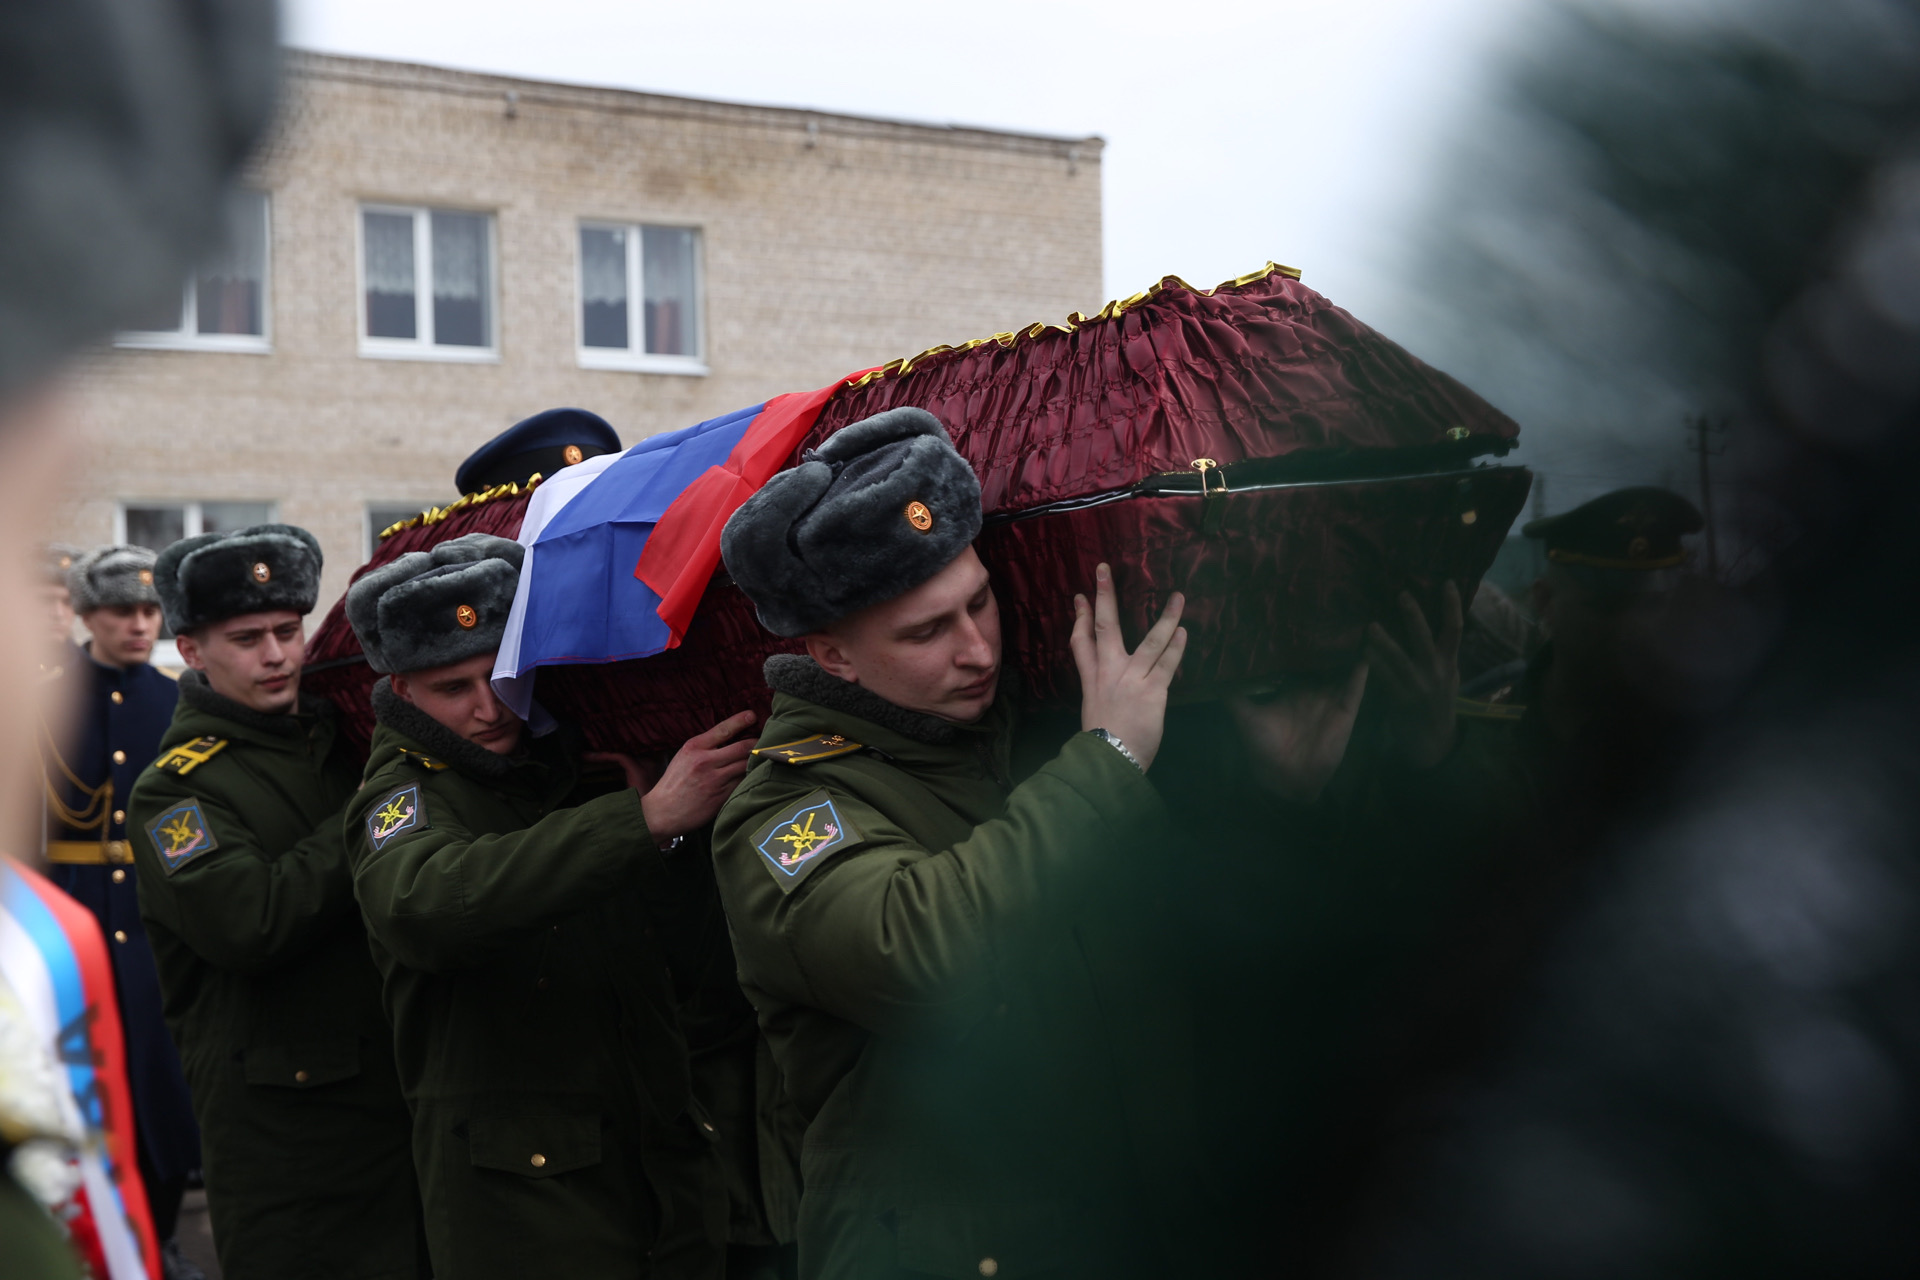 Маи прощание. В Твери простились с погибшими. Прощание с погибшими на Украине.